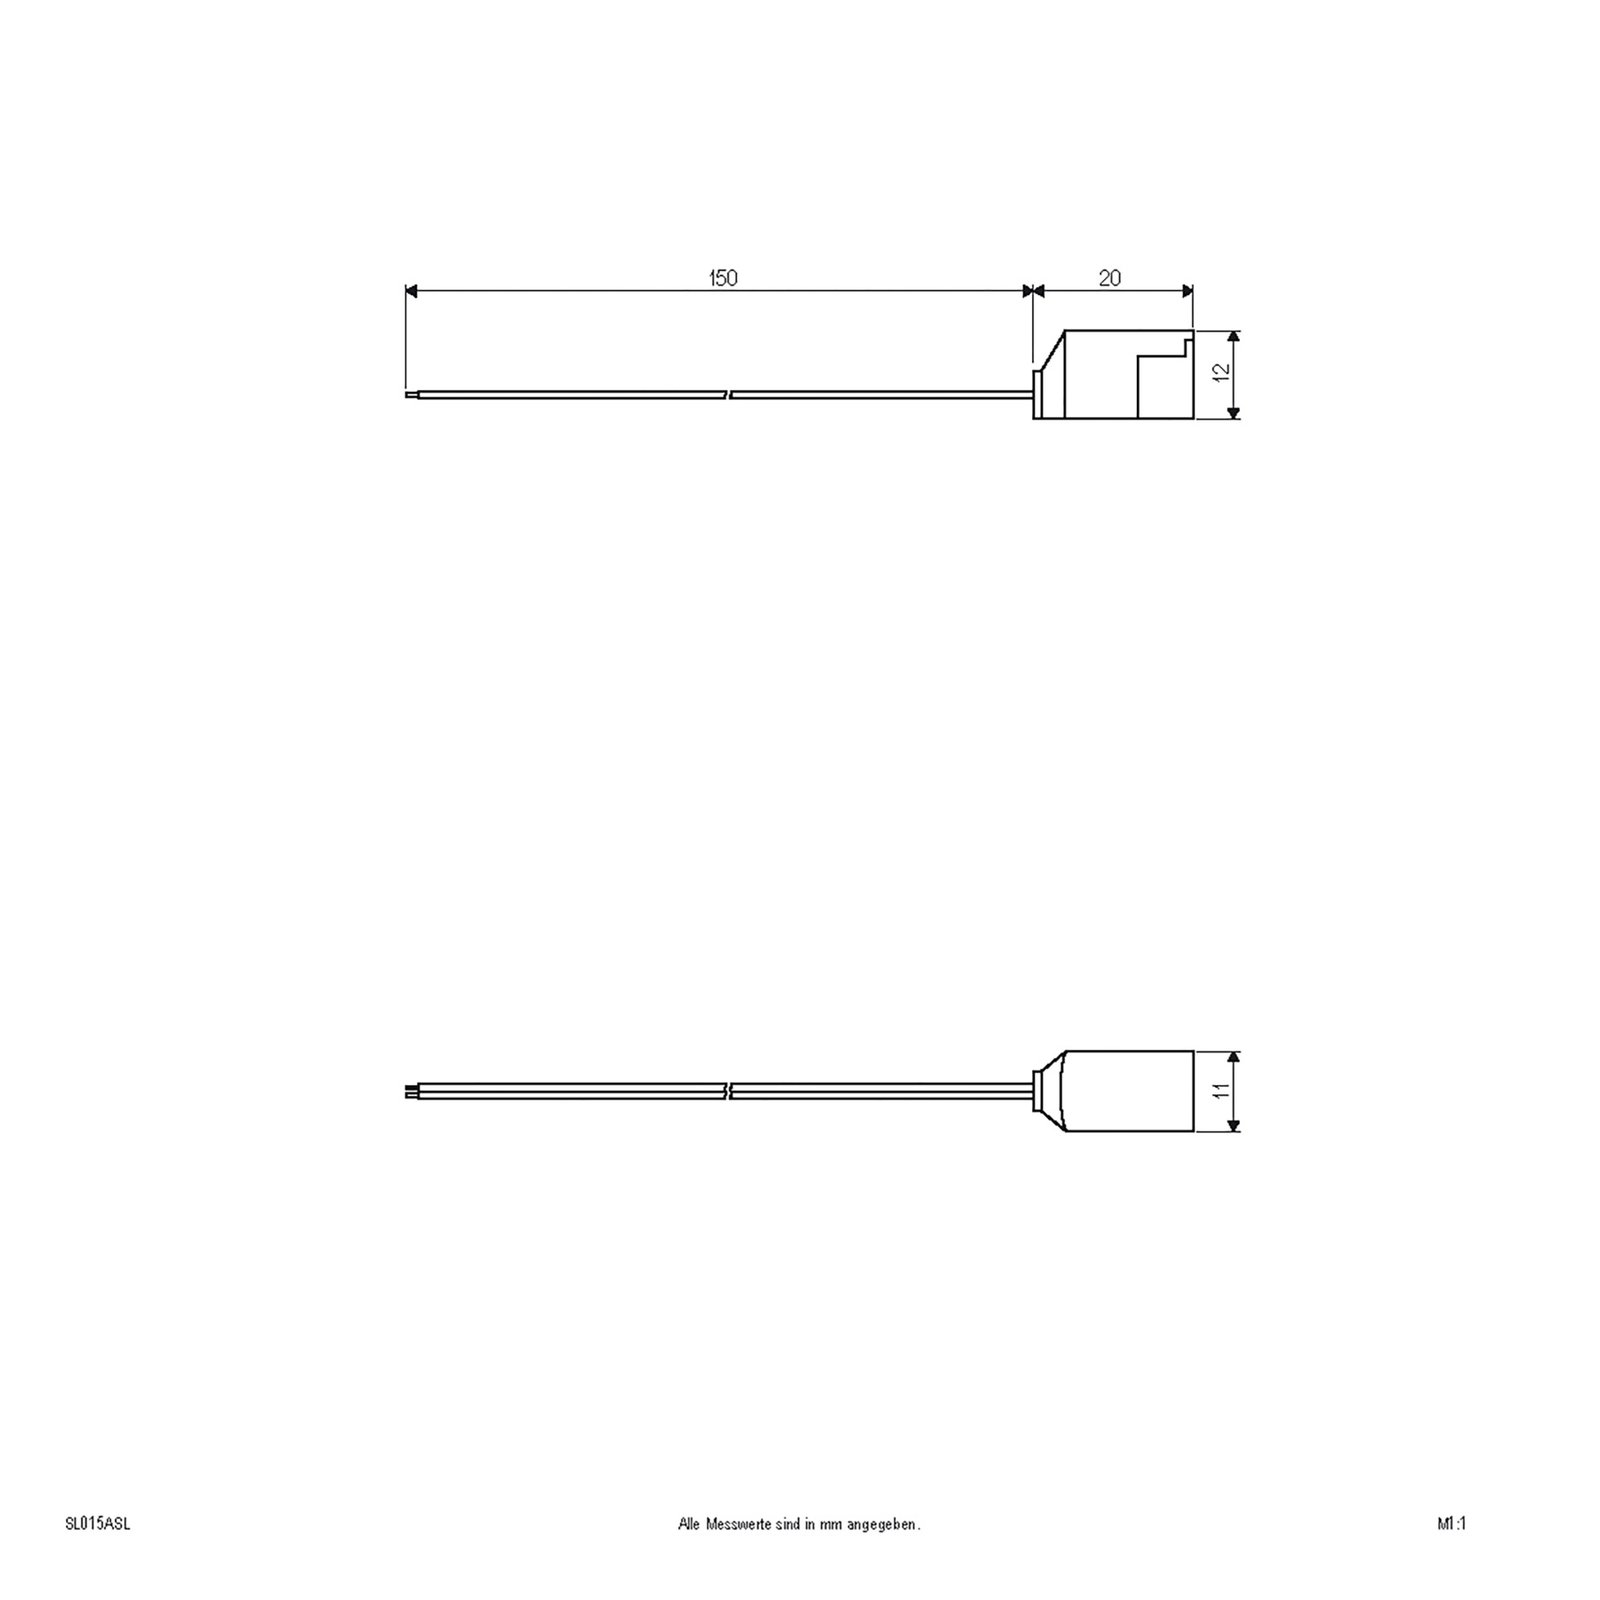 Cable de conexión para la serie Bordo, largo 15 cm